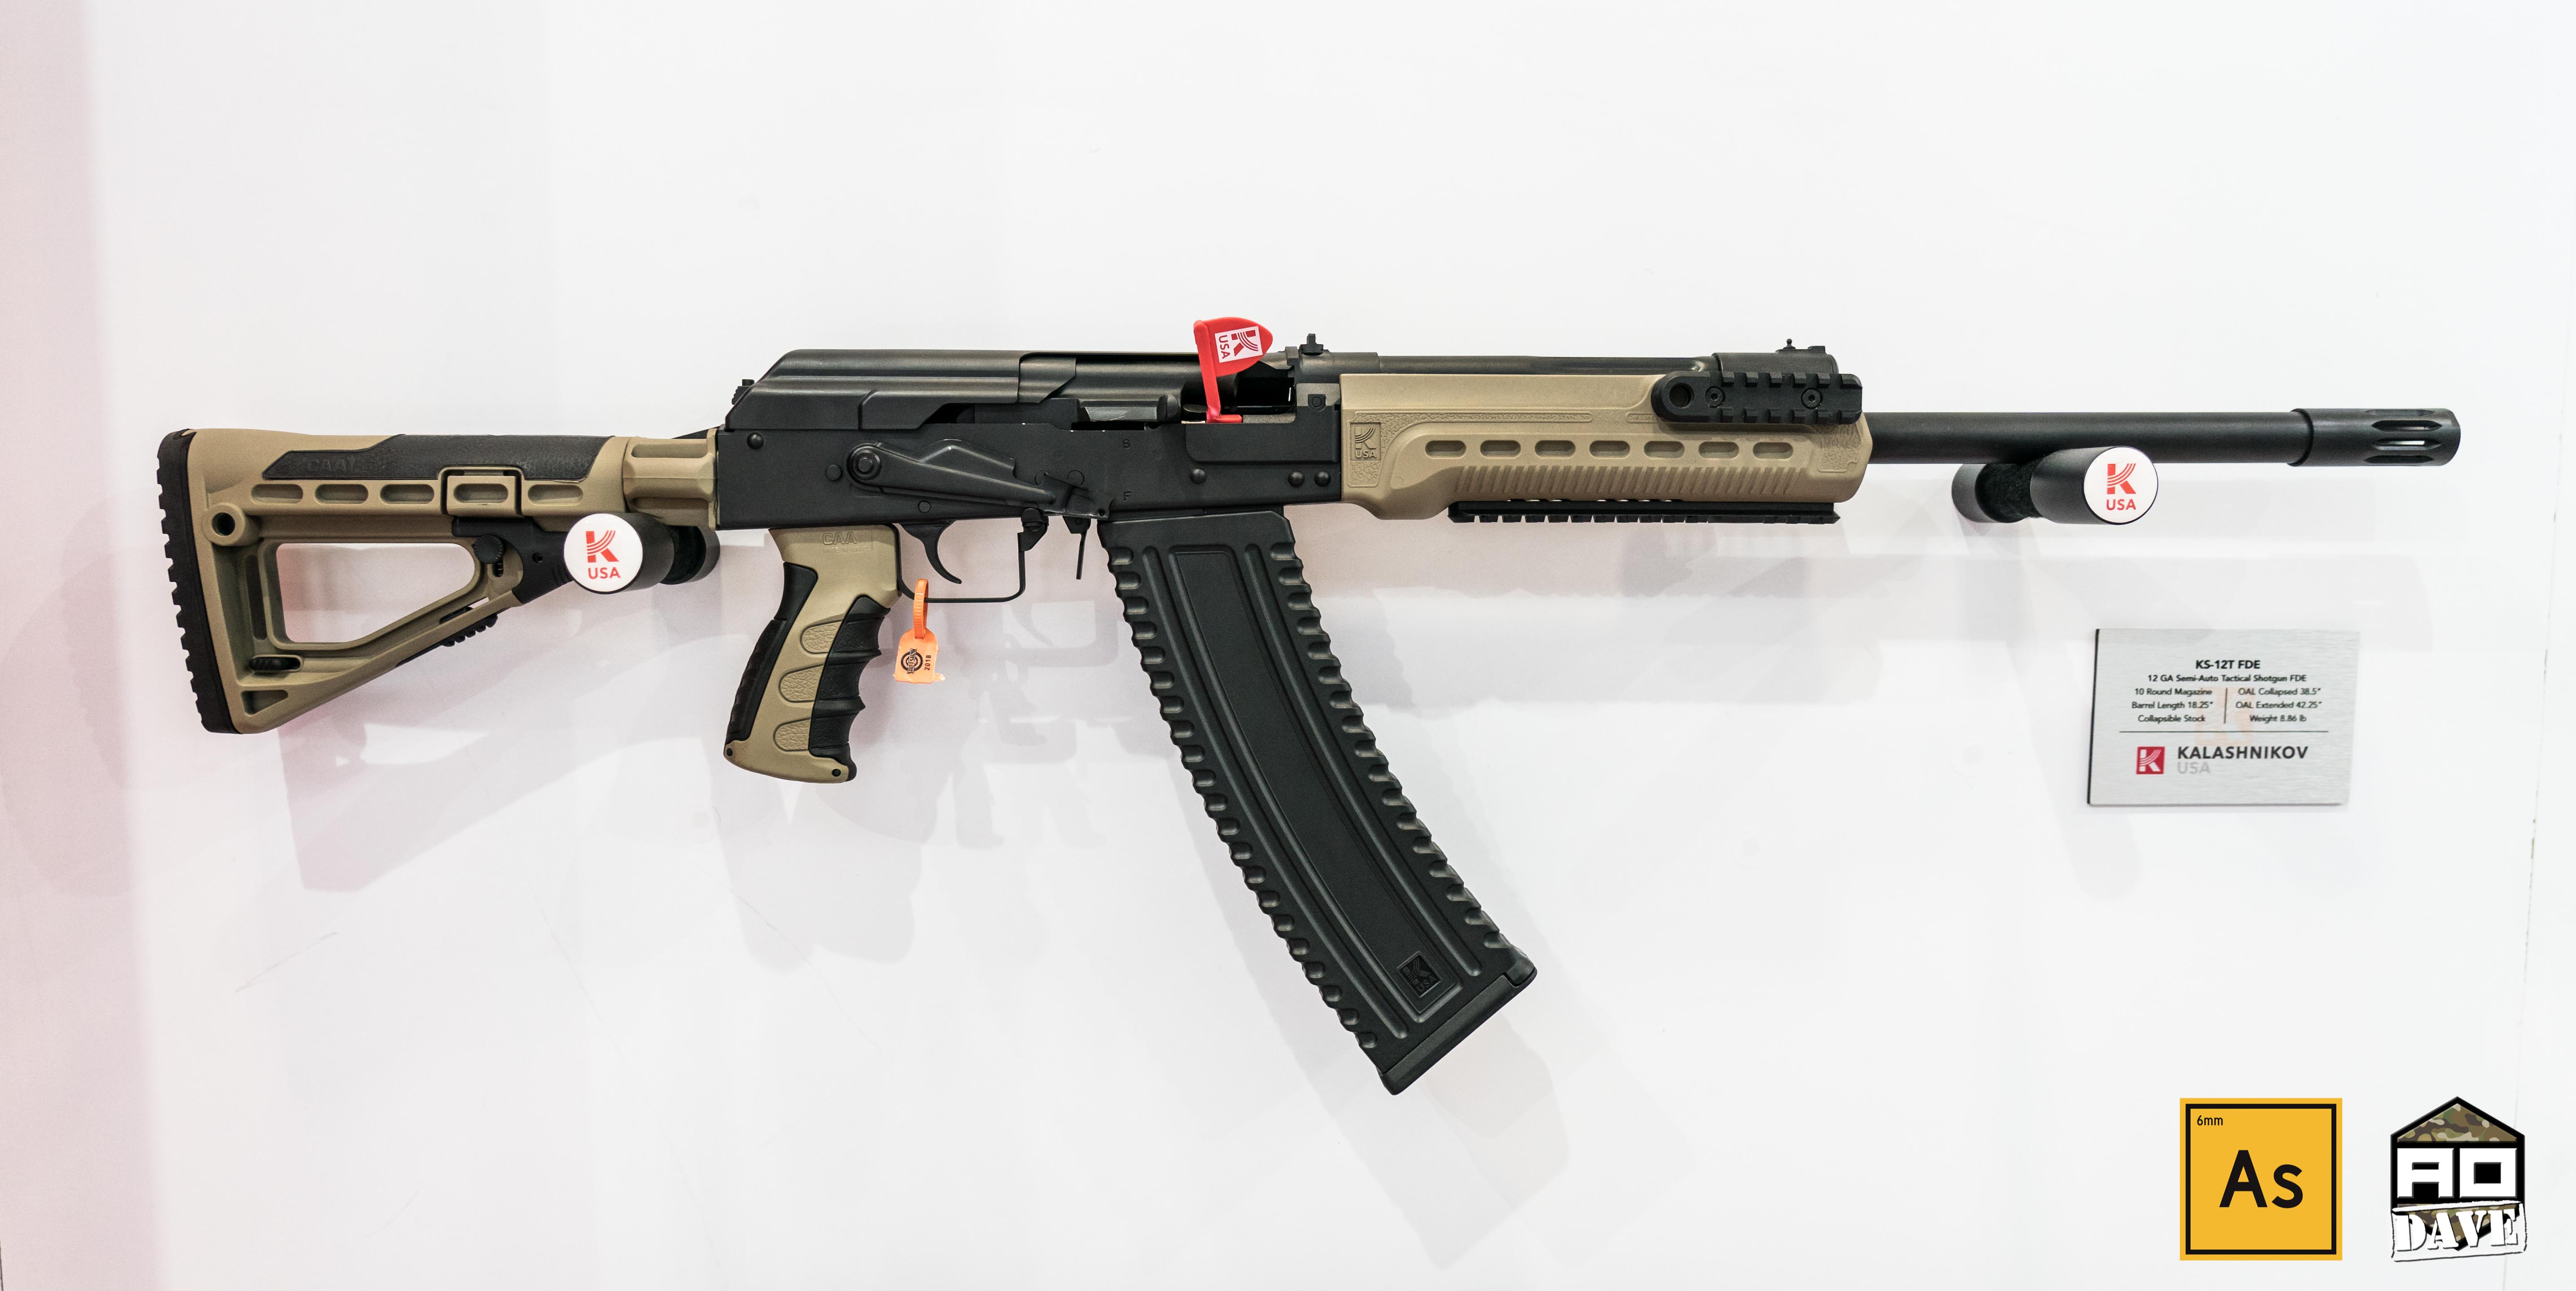 Kalashnikov usa shot show 2018